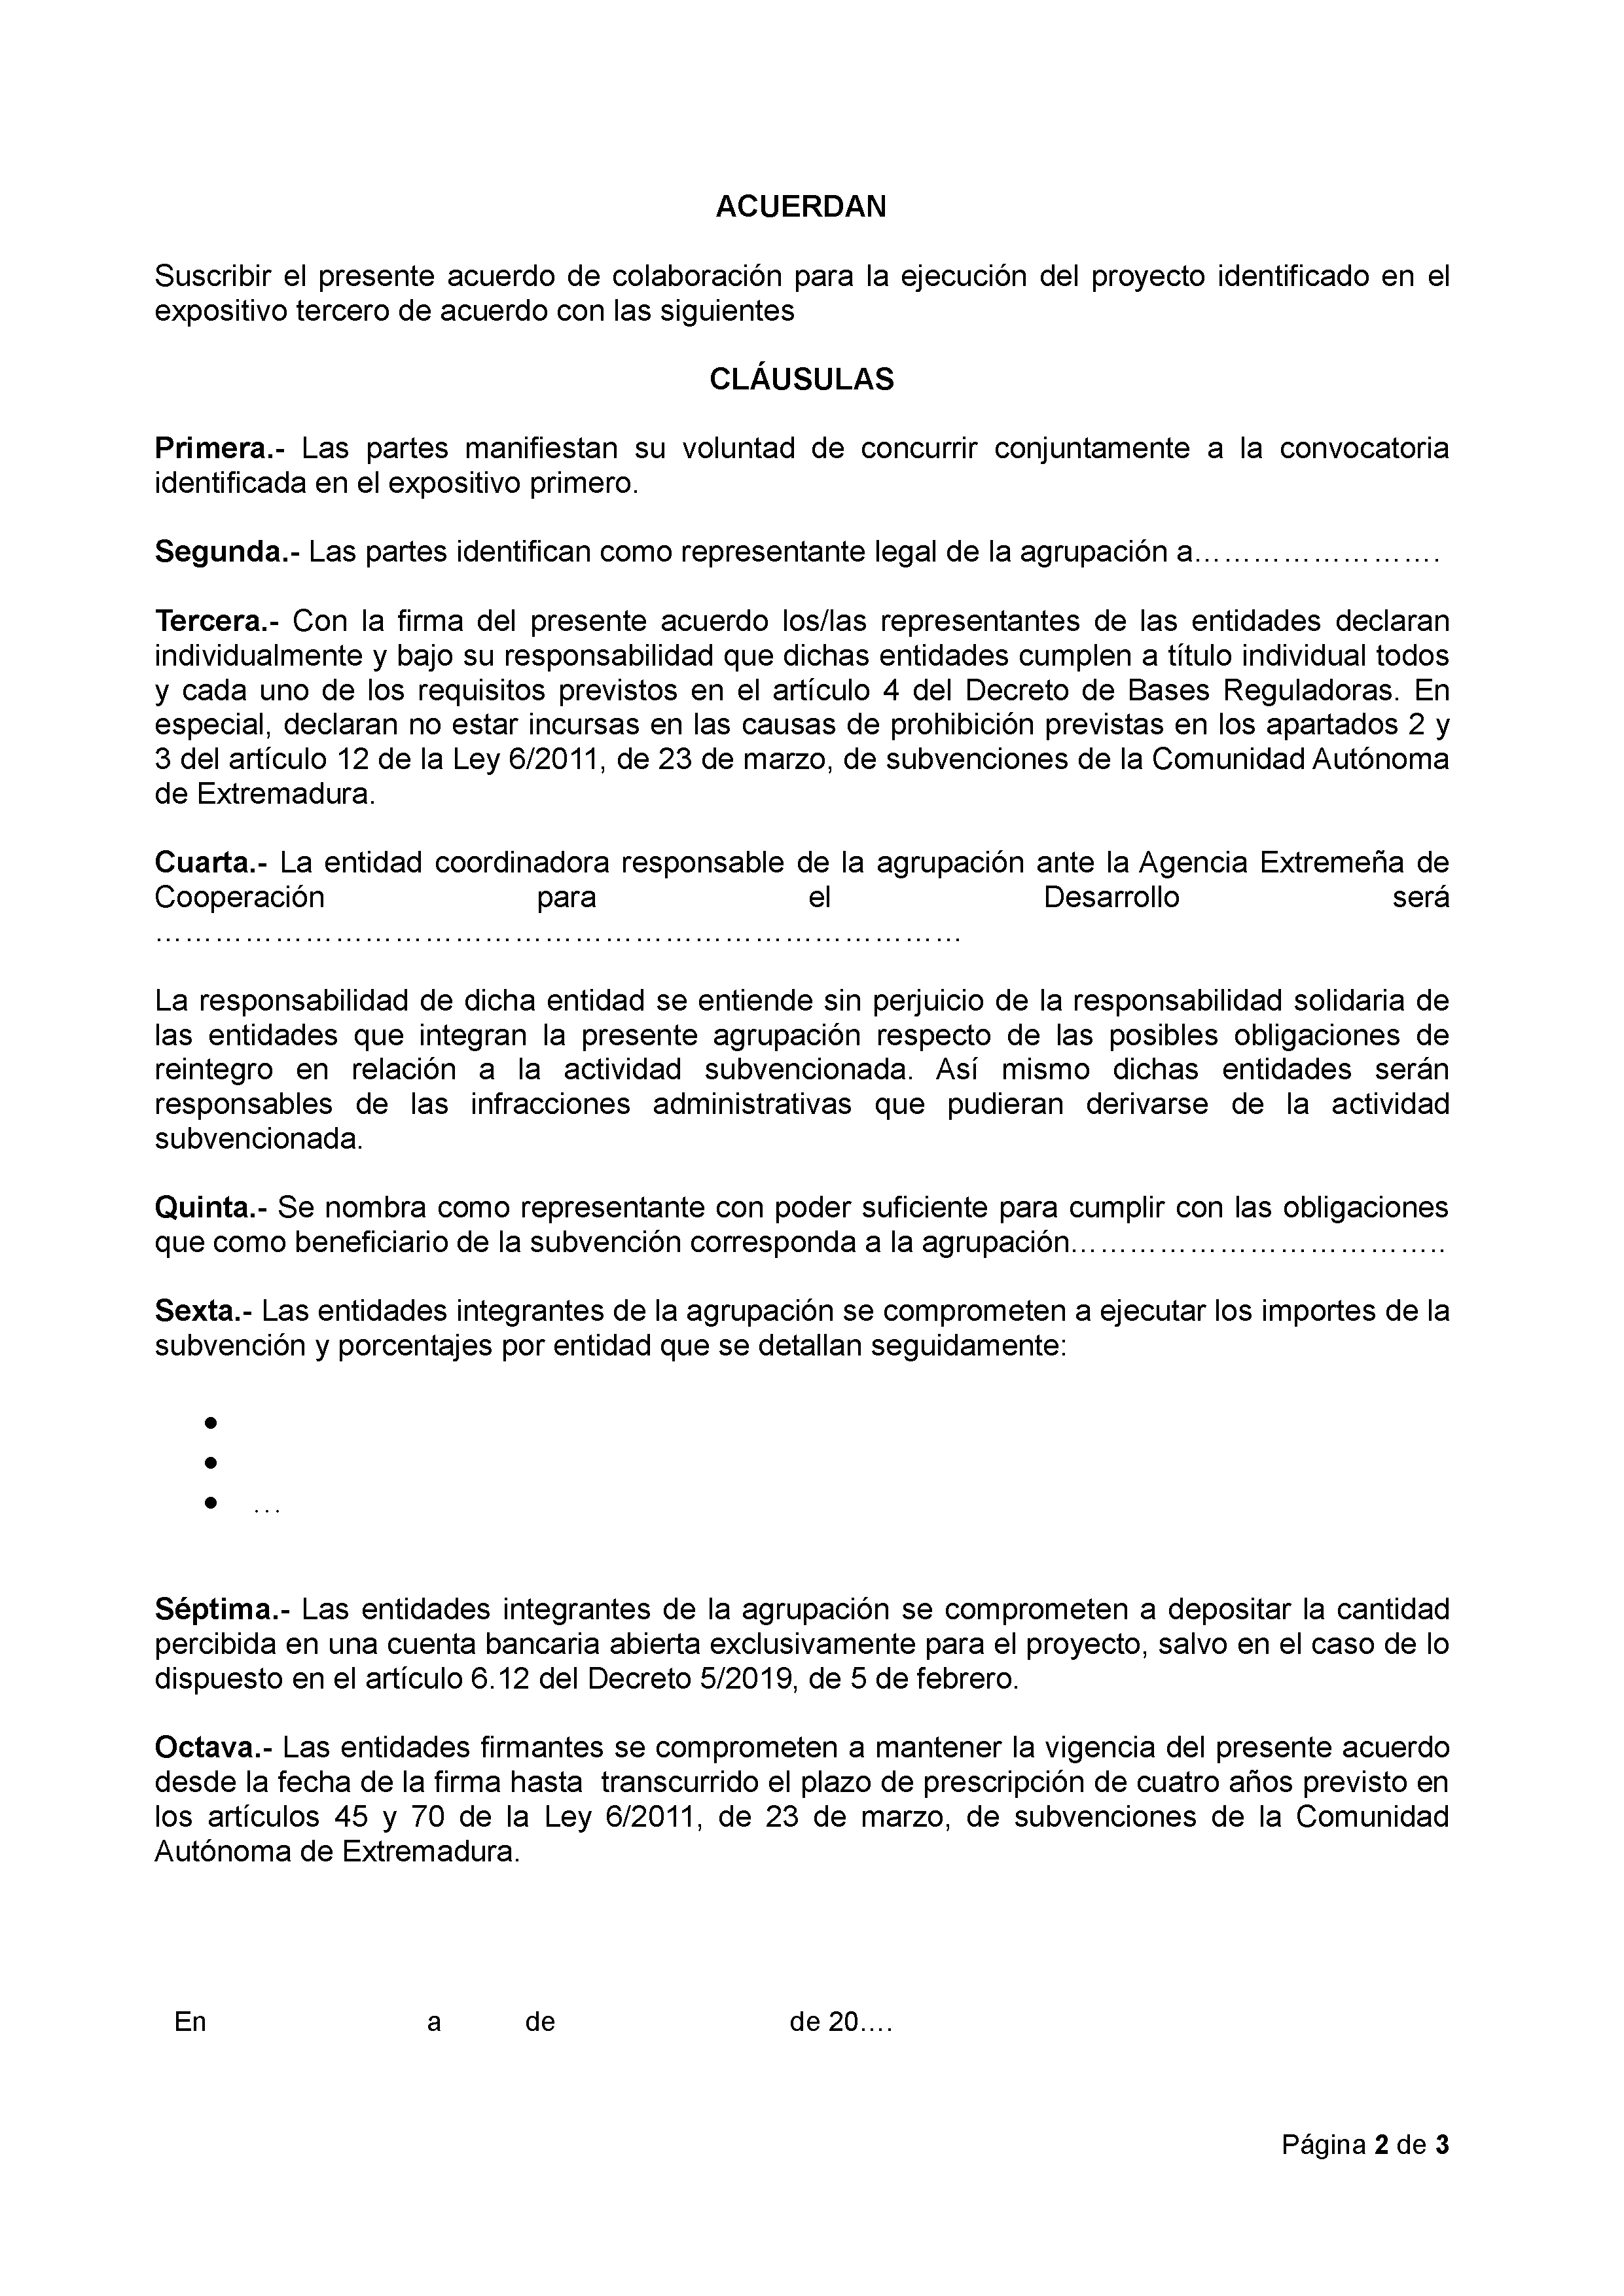 ANEXO IV MODELO DE ACUERDO DE COLABORACIÓN PARA AGRUPACIÓN DE ENTIDADES SIN PERSONALIDAD JURÍDICA PAG.2